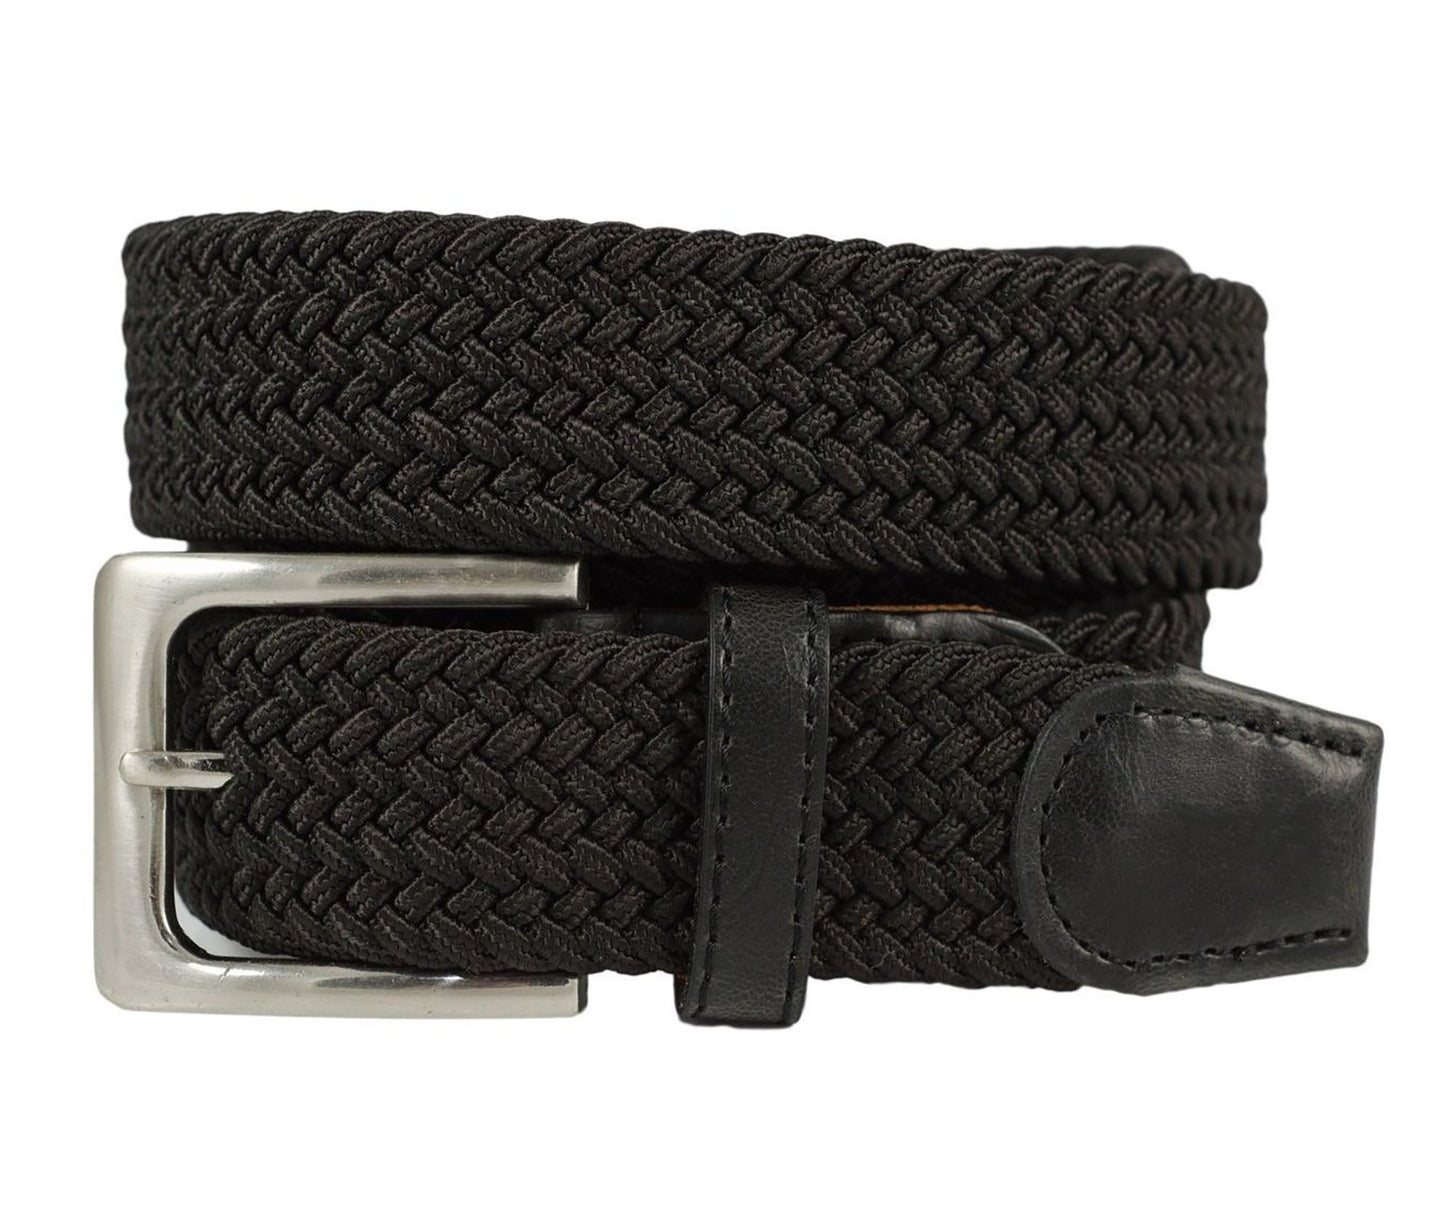 Elastic 1 1/4" Wide Woven Stretch Web Belt - Black